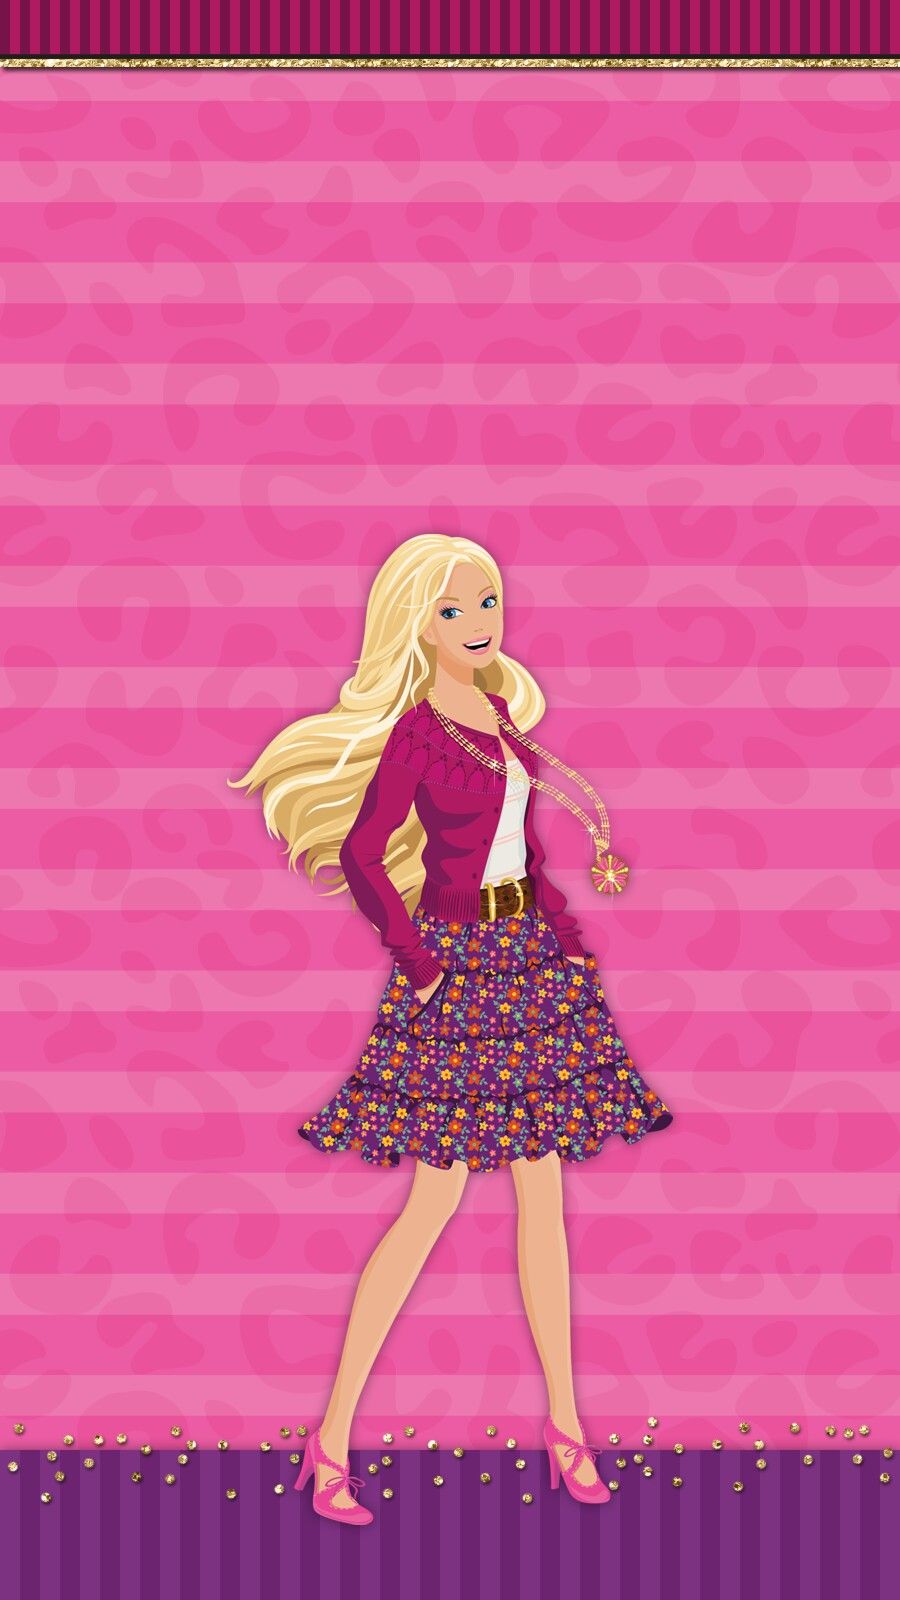 Barbie Wallpaper Iphone Barbie Pink Wallpaper Iphone Hd Wallpaper Backgrounds Download